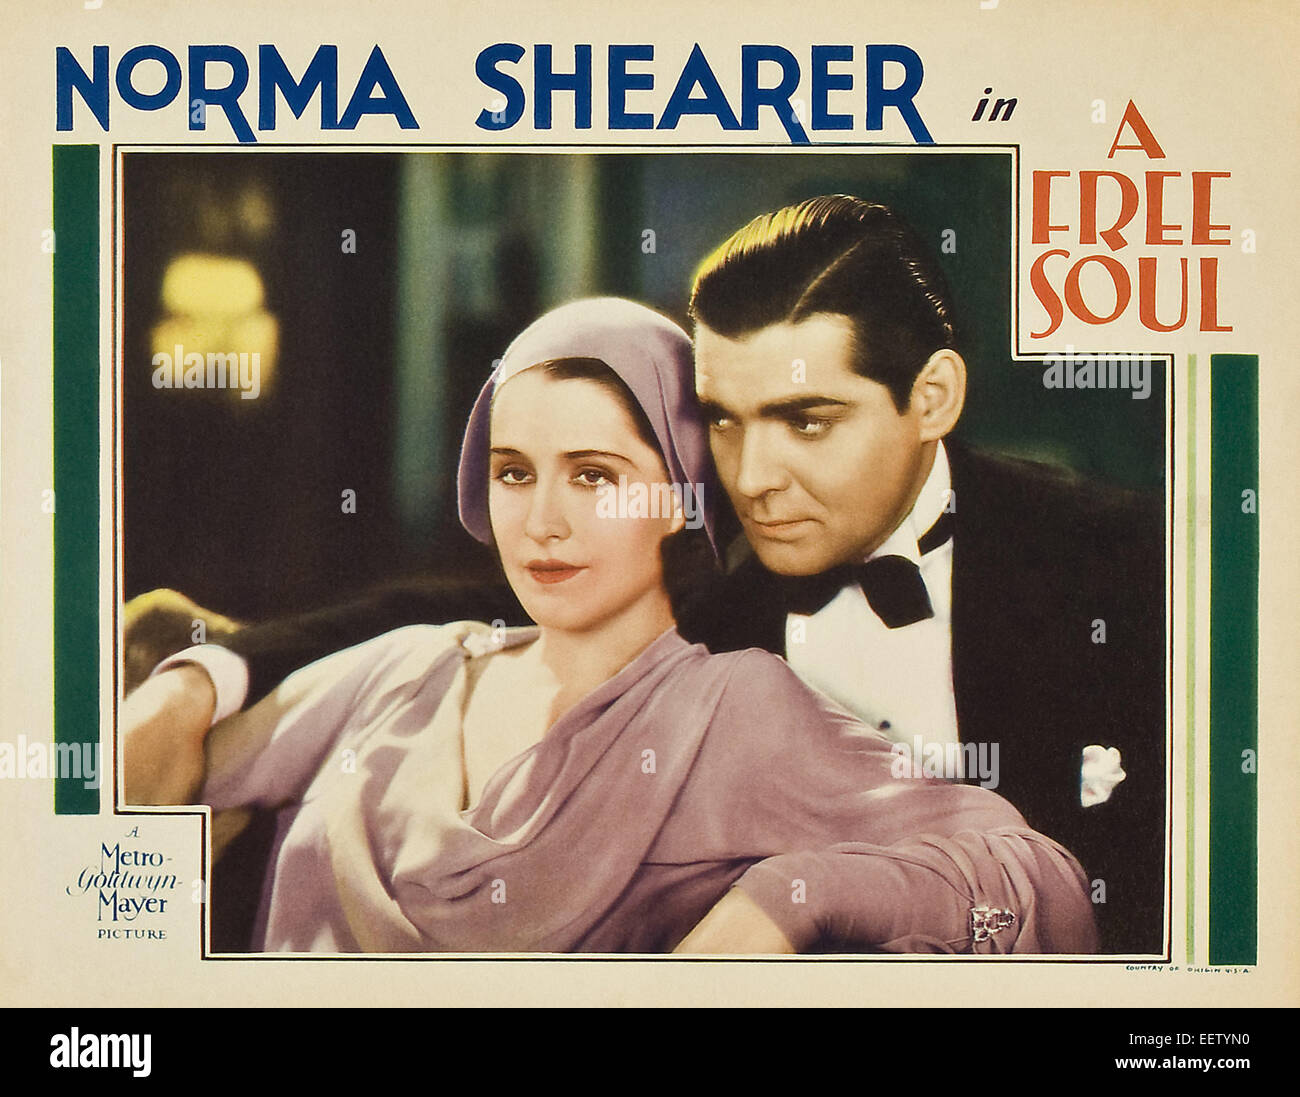 eine freie Seele - Norma Shearer Filmplakat Stockfoto